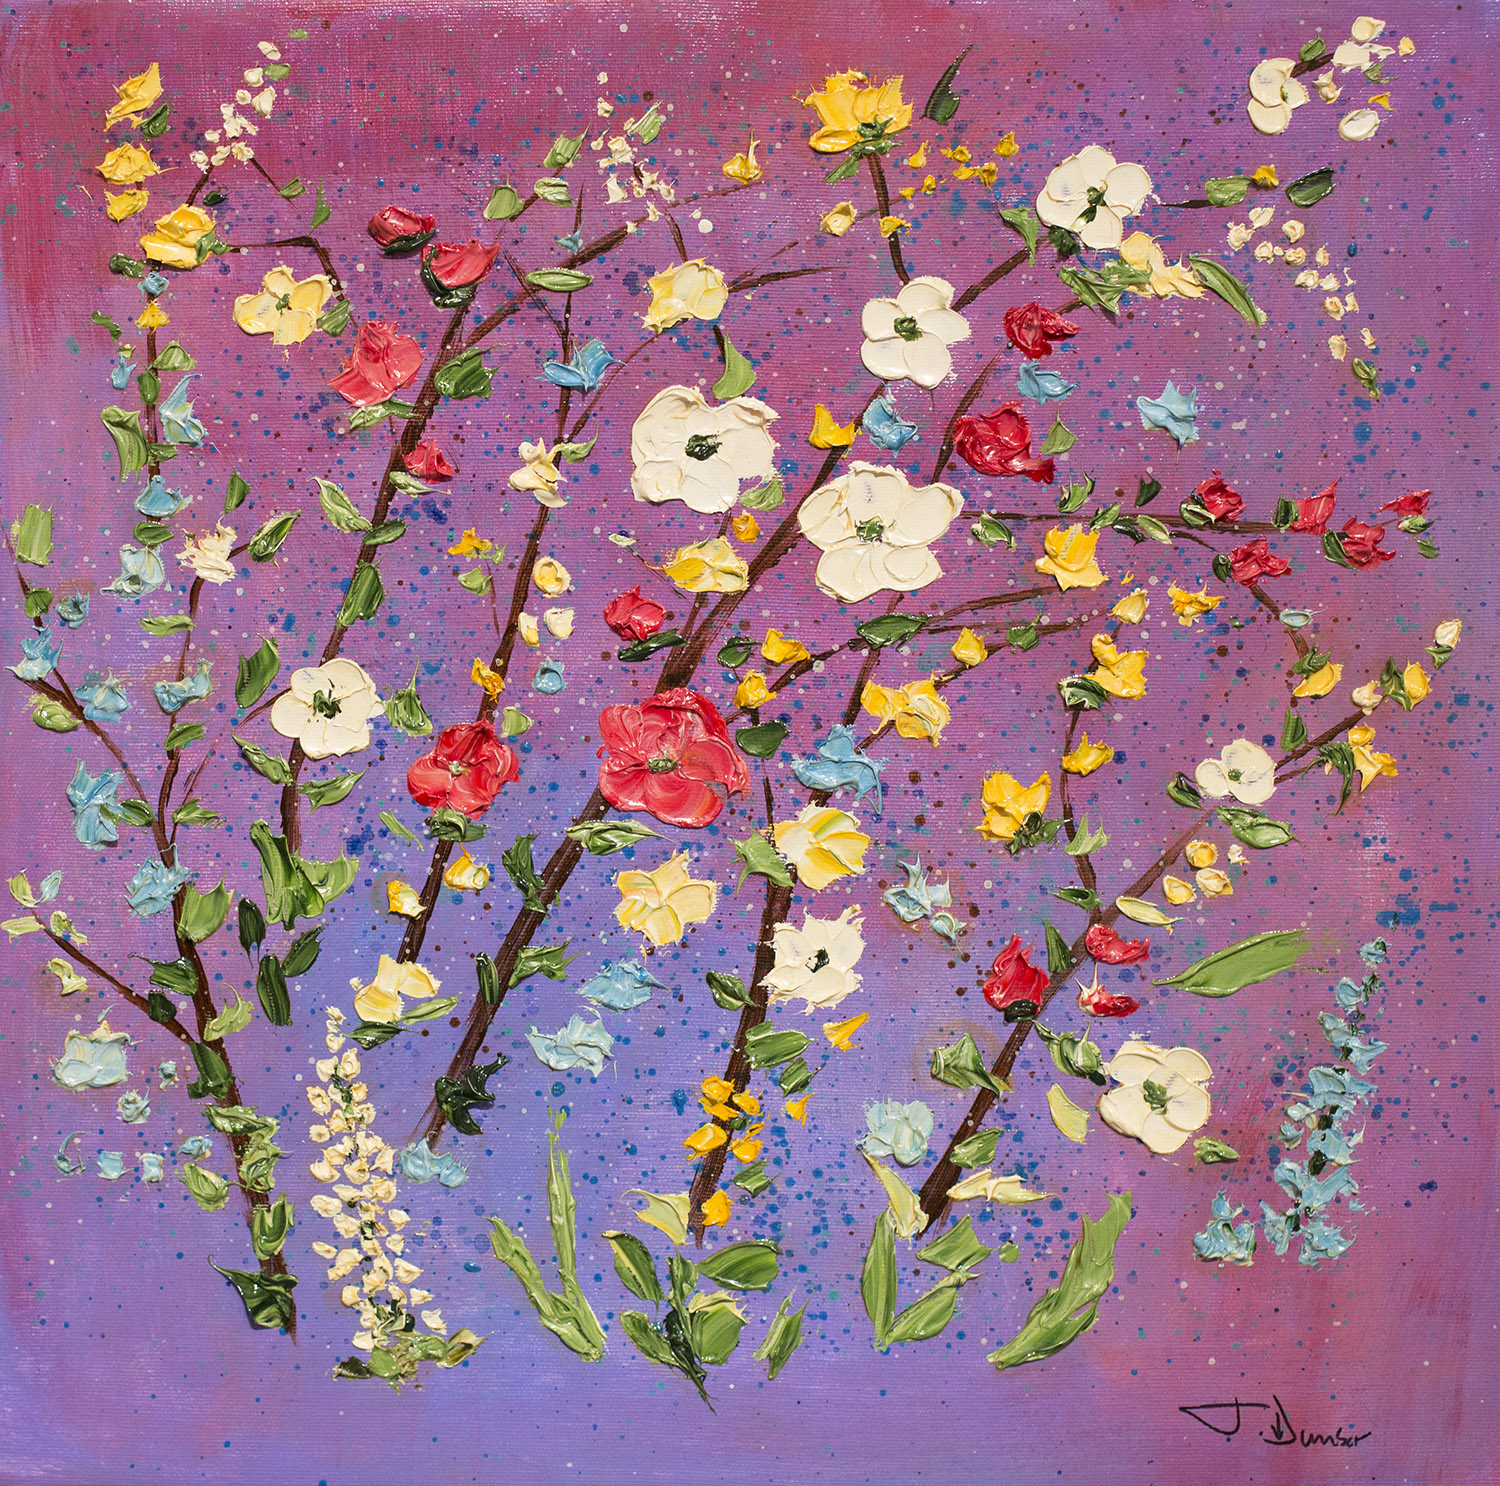 JUDITH DUNBAR "Wild Flowers“ 16x16